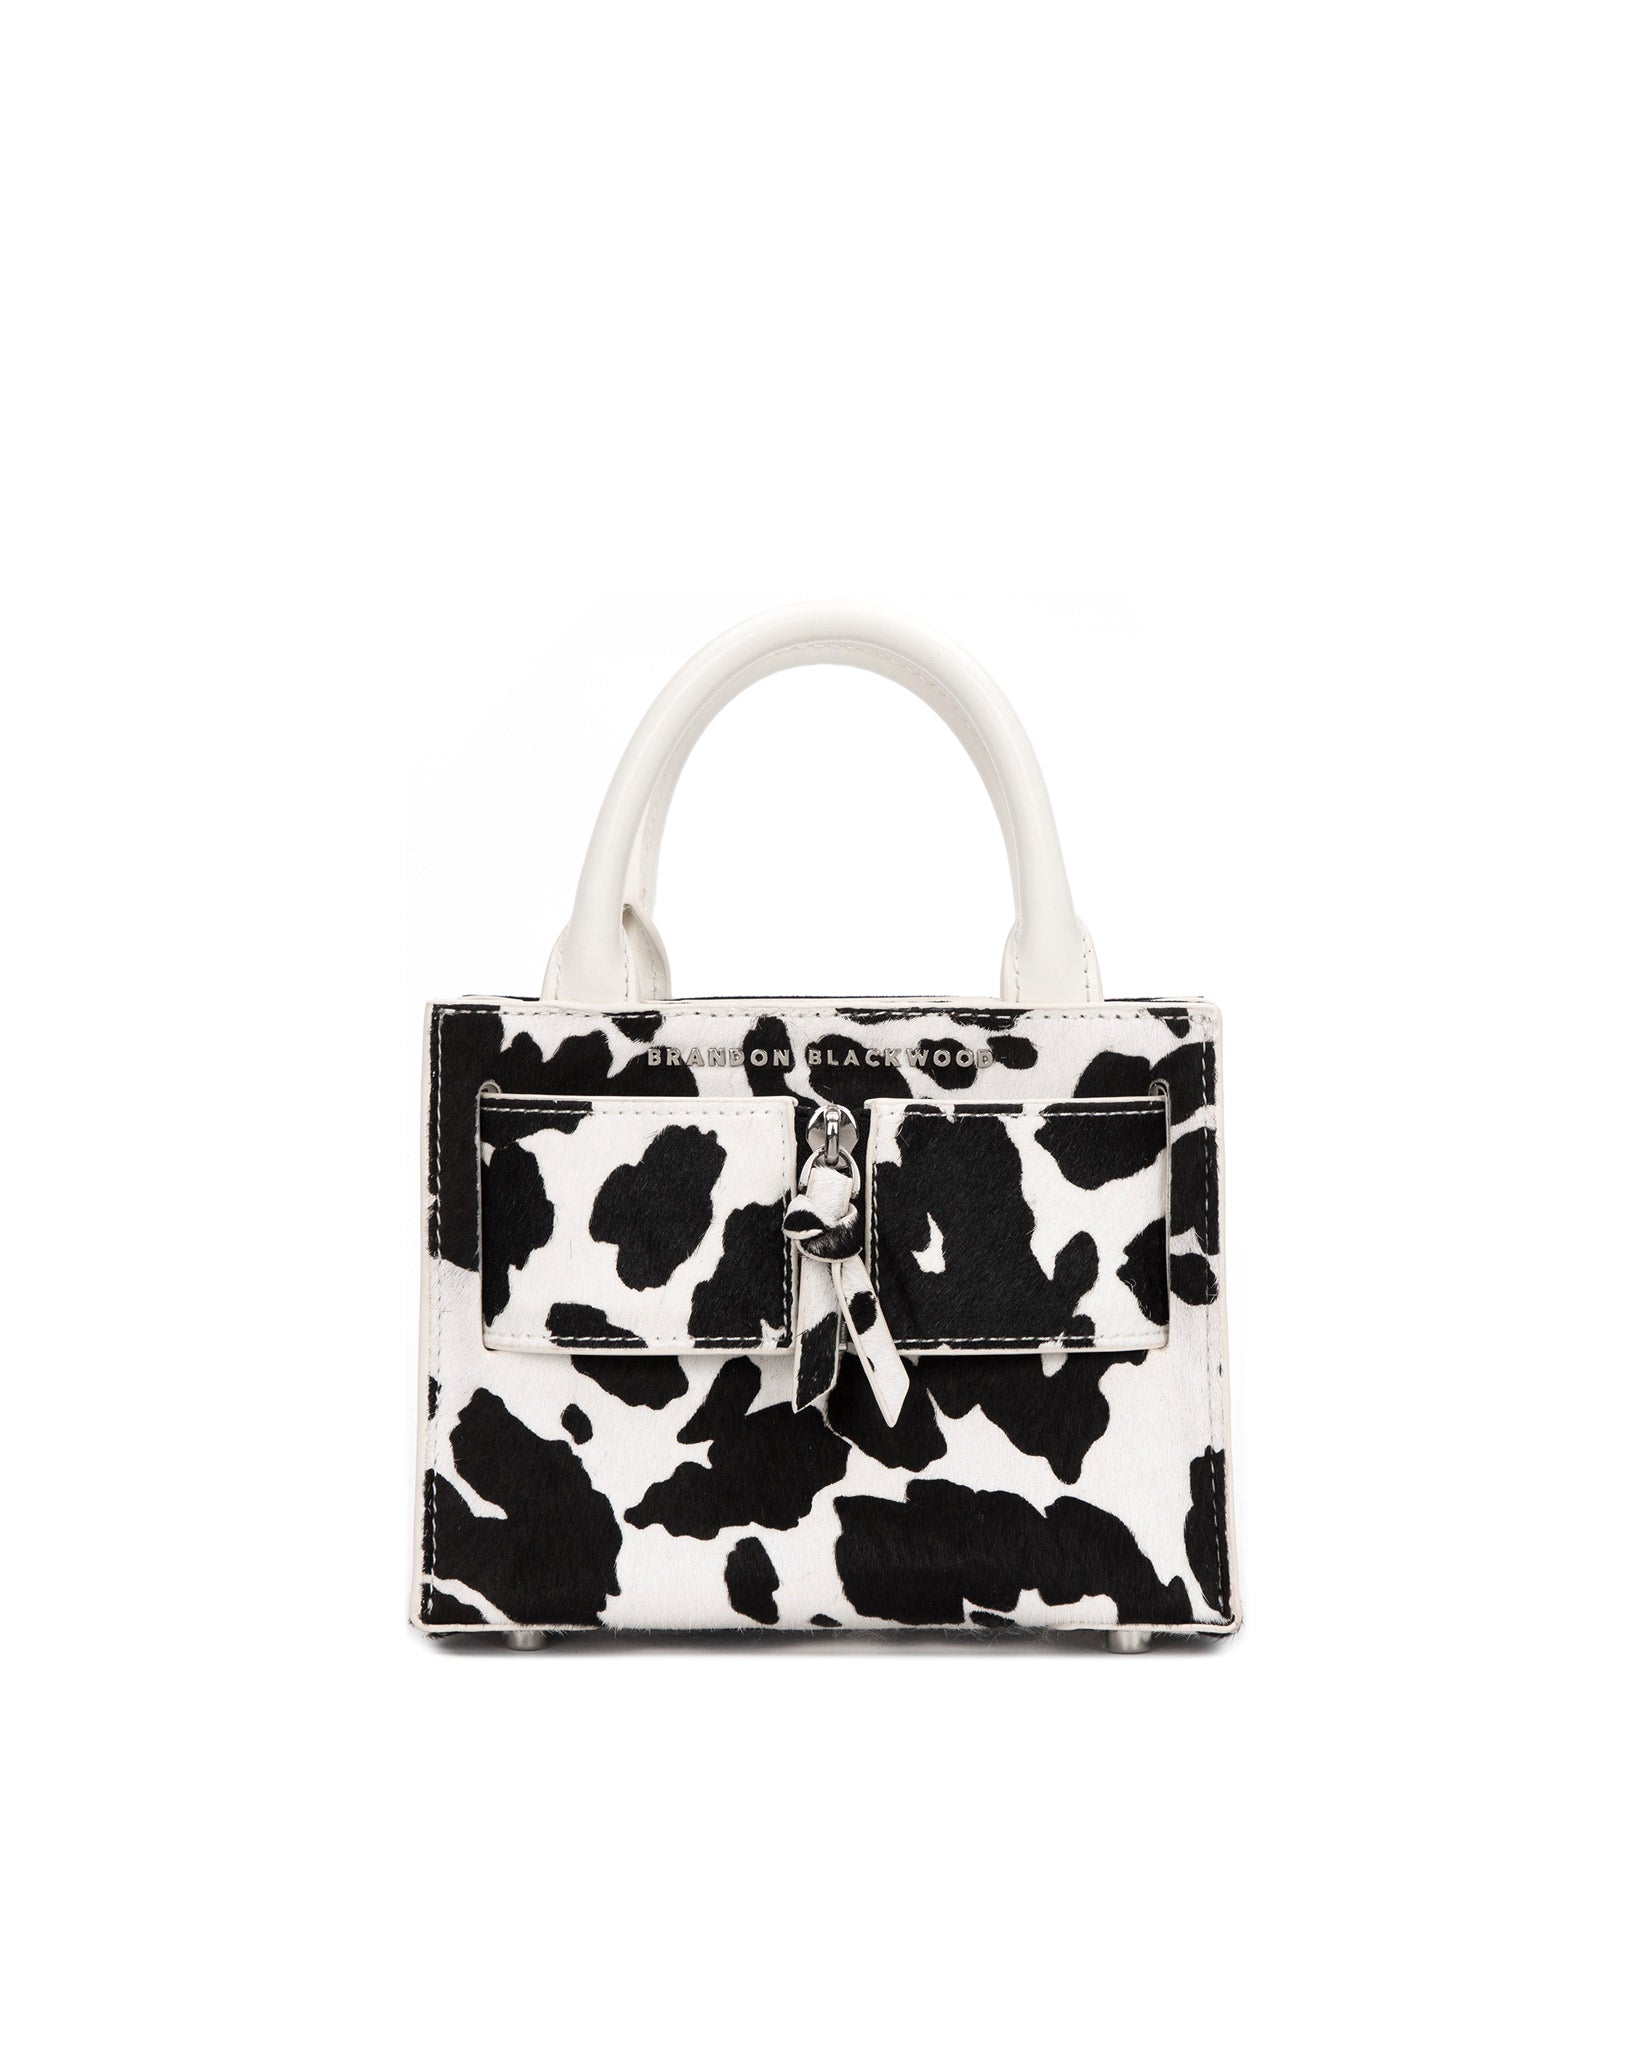 Brandon Blackwood New York - Kuei Bag - Cow Print Ponyhair